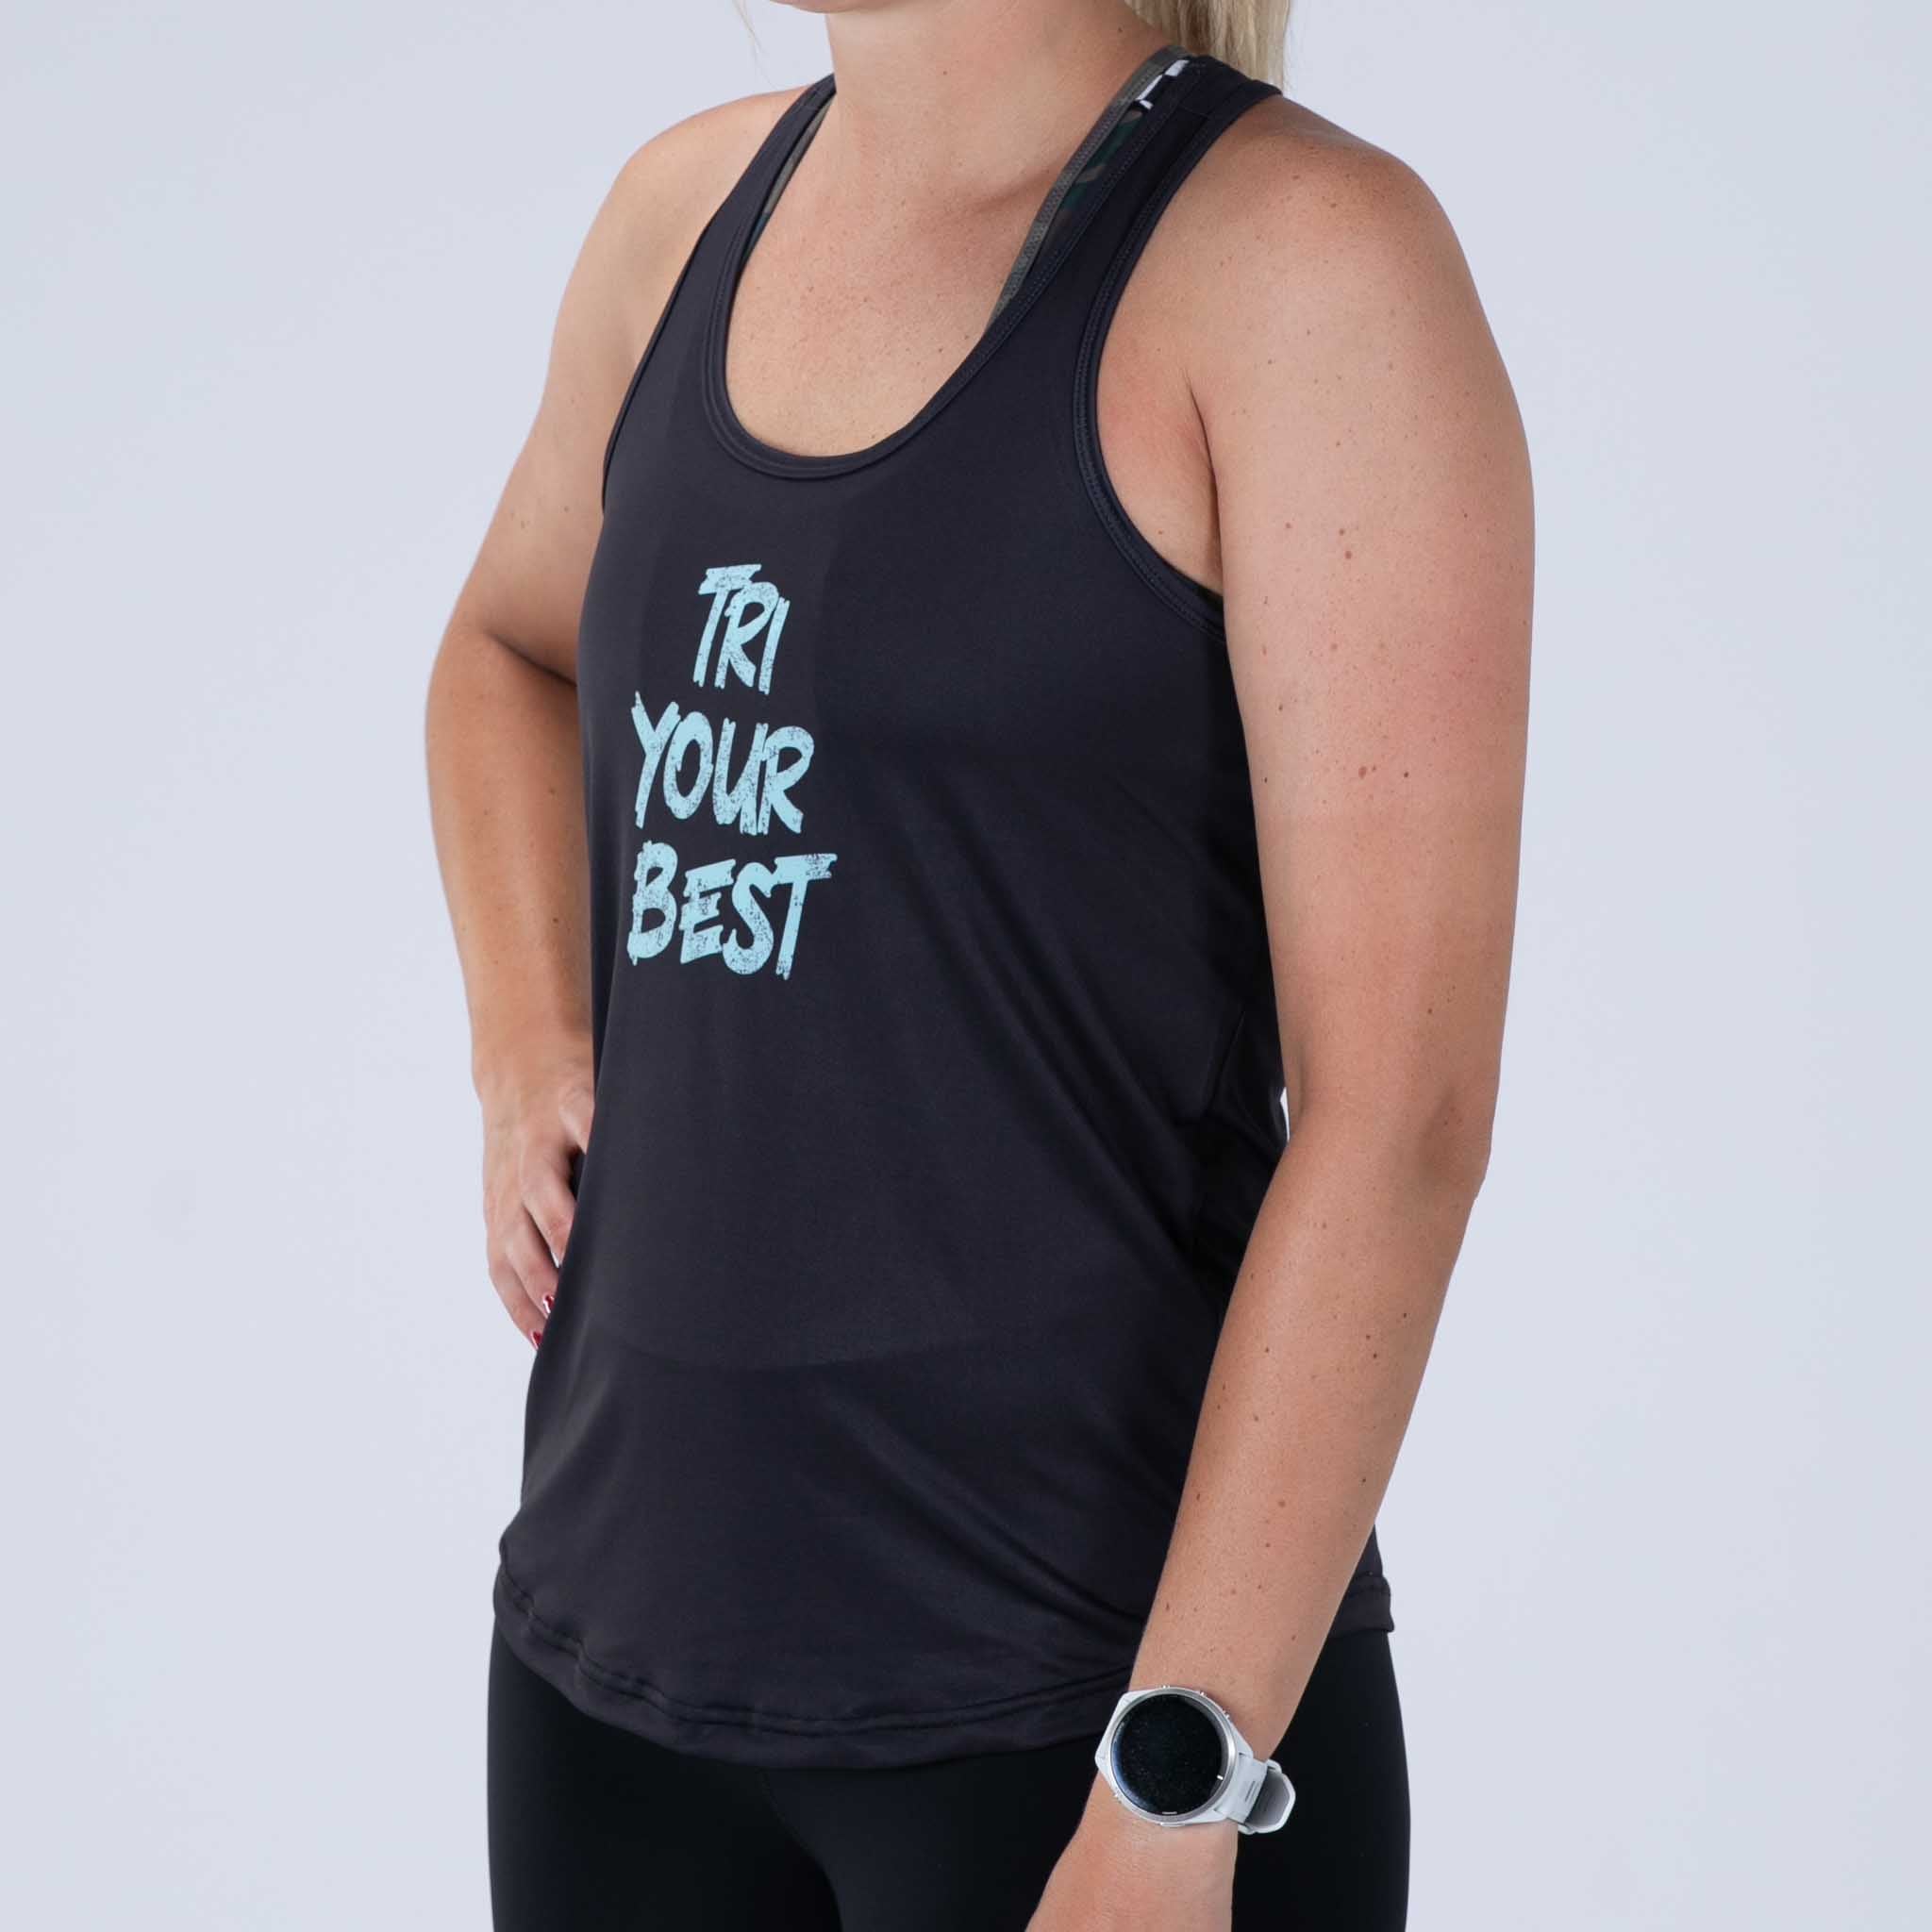 Zoot Sports RUN SINGLET Women's Ltd Run Singlet - Tri Your Best